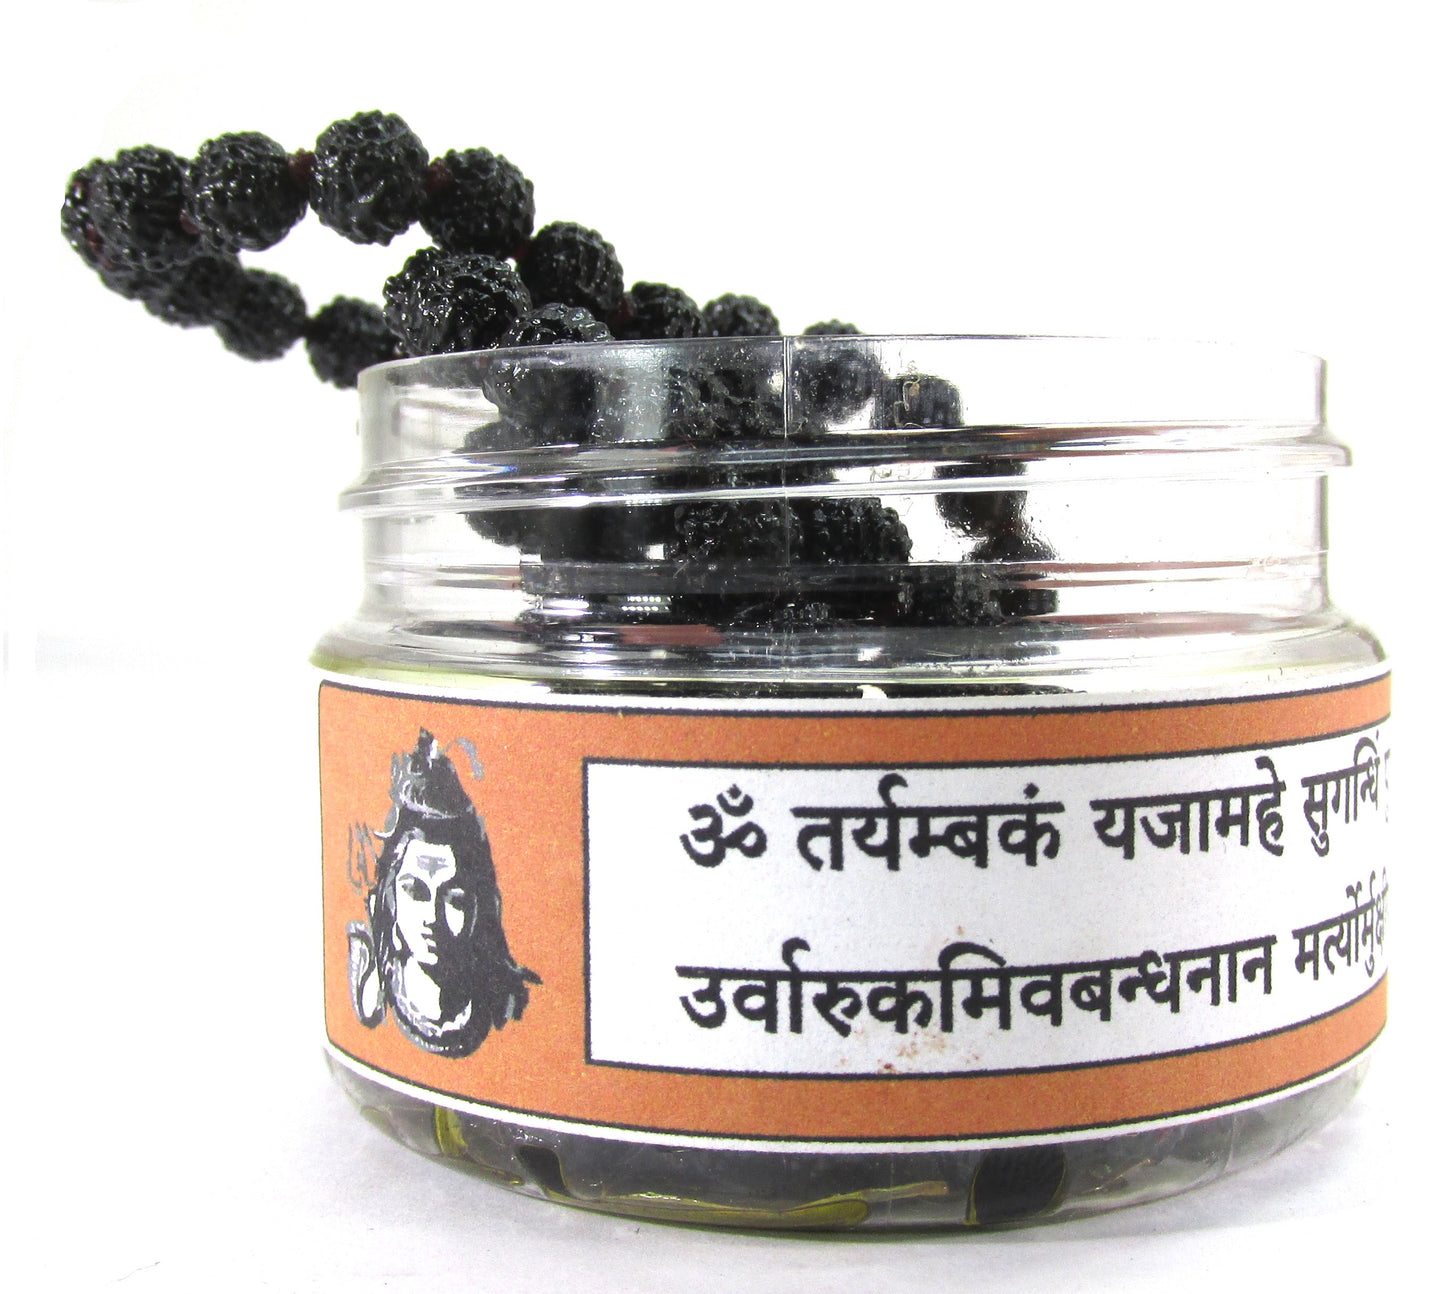 ShivaRatna Rudraksha Mala Dipped In Oil And Herbs (Mantra Siddha) 108+1 Beads - ShivaRatna